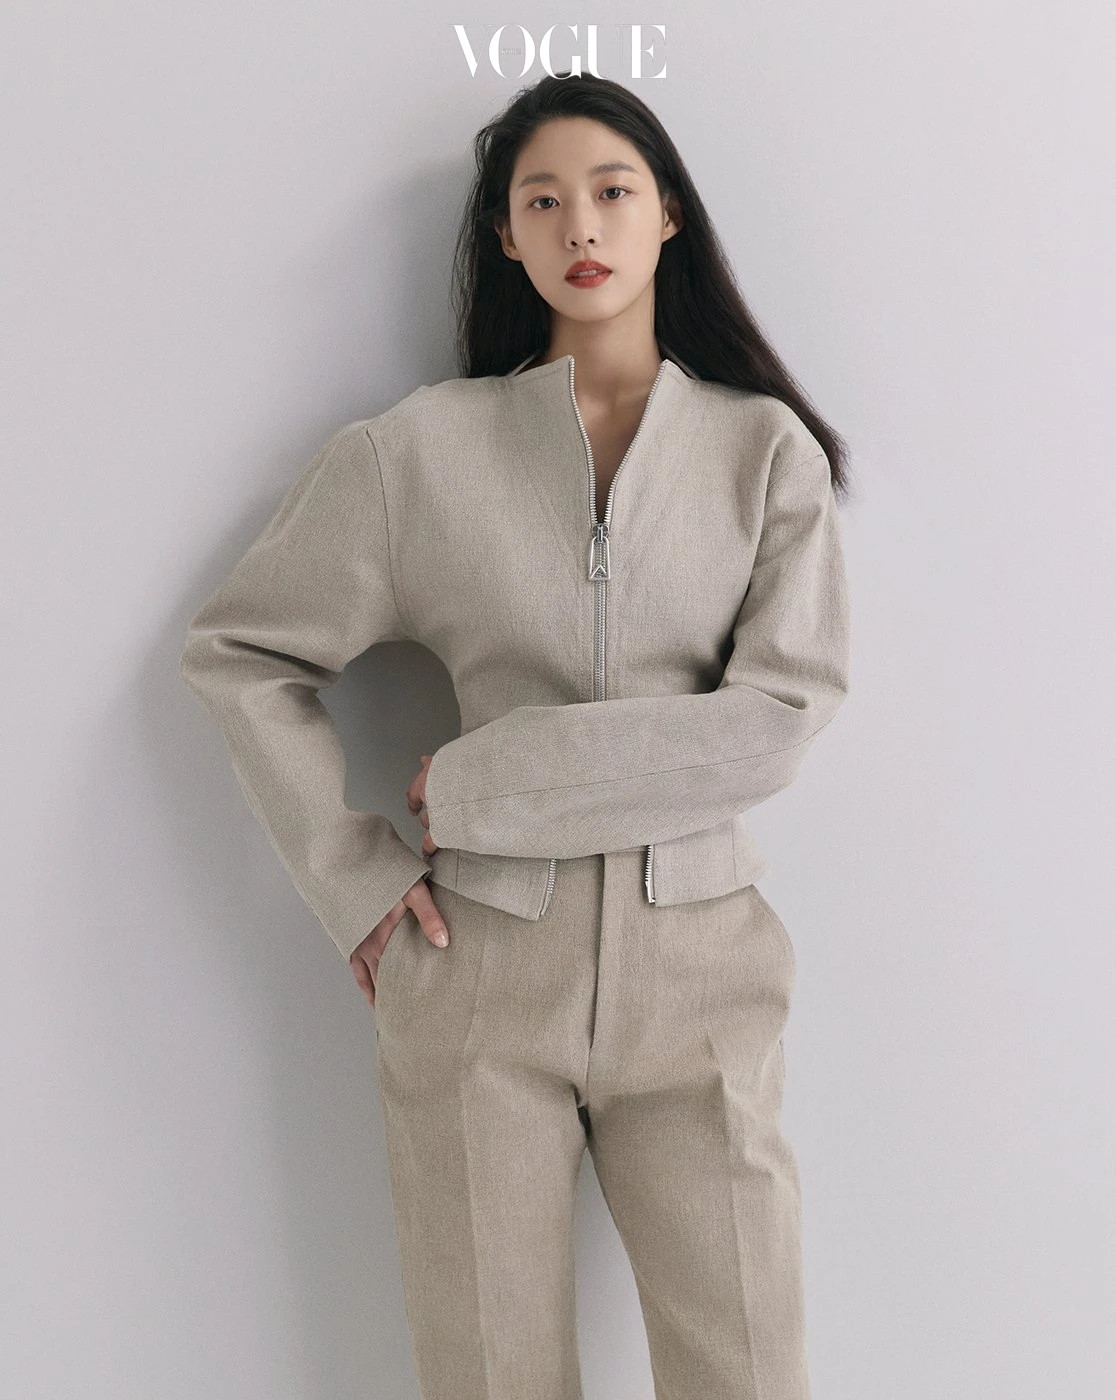 Seolhyun-for-Vogue-Korea-March-2021-documents-4.jpeg